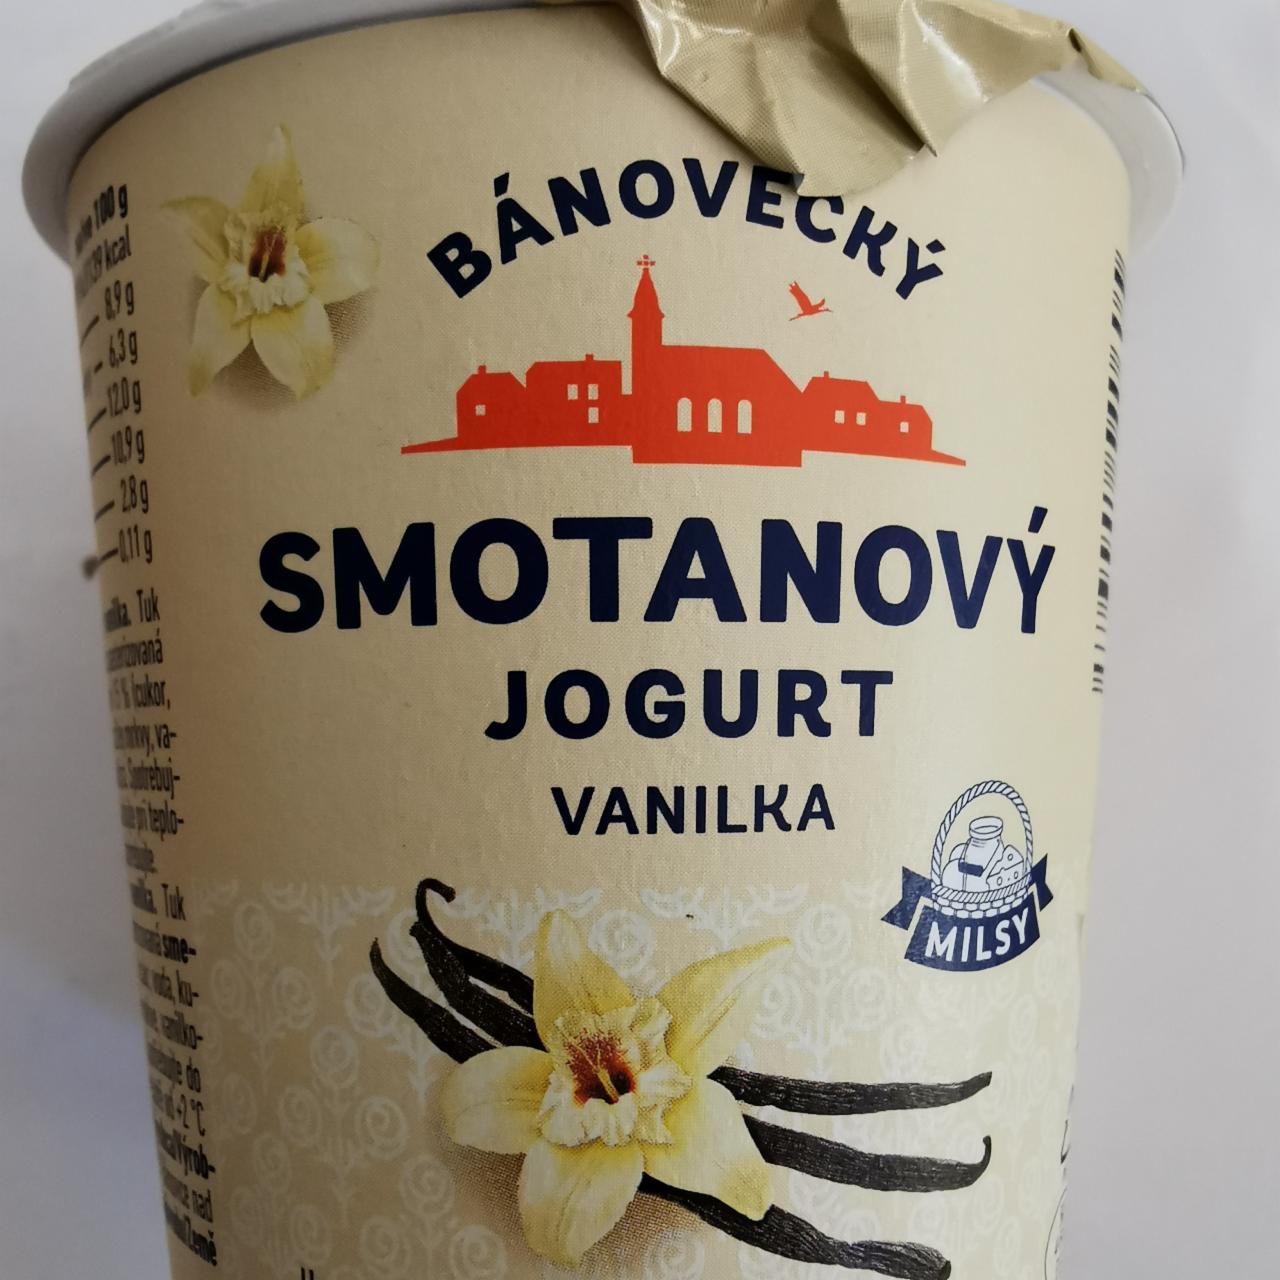 Képek - Bánovecký smotanový joghurt vanilka Milsy